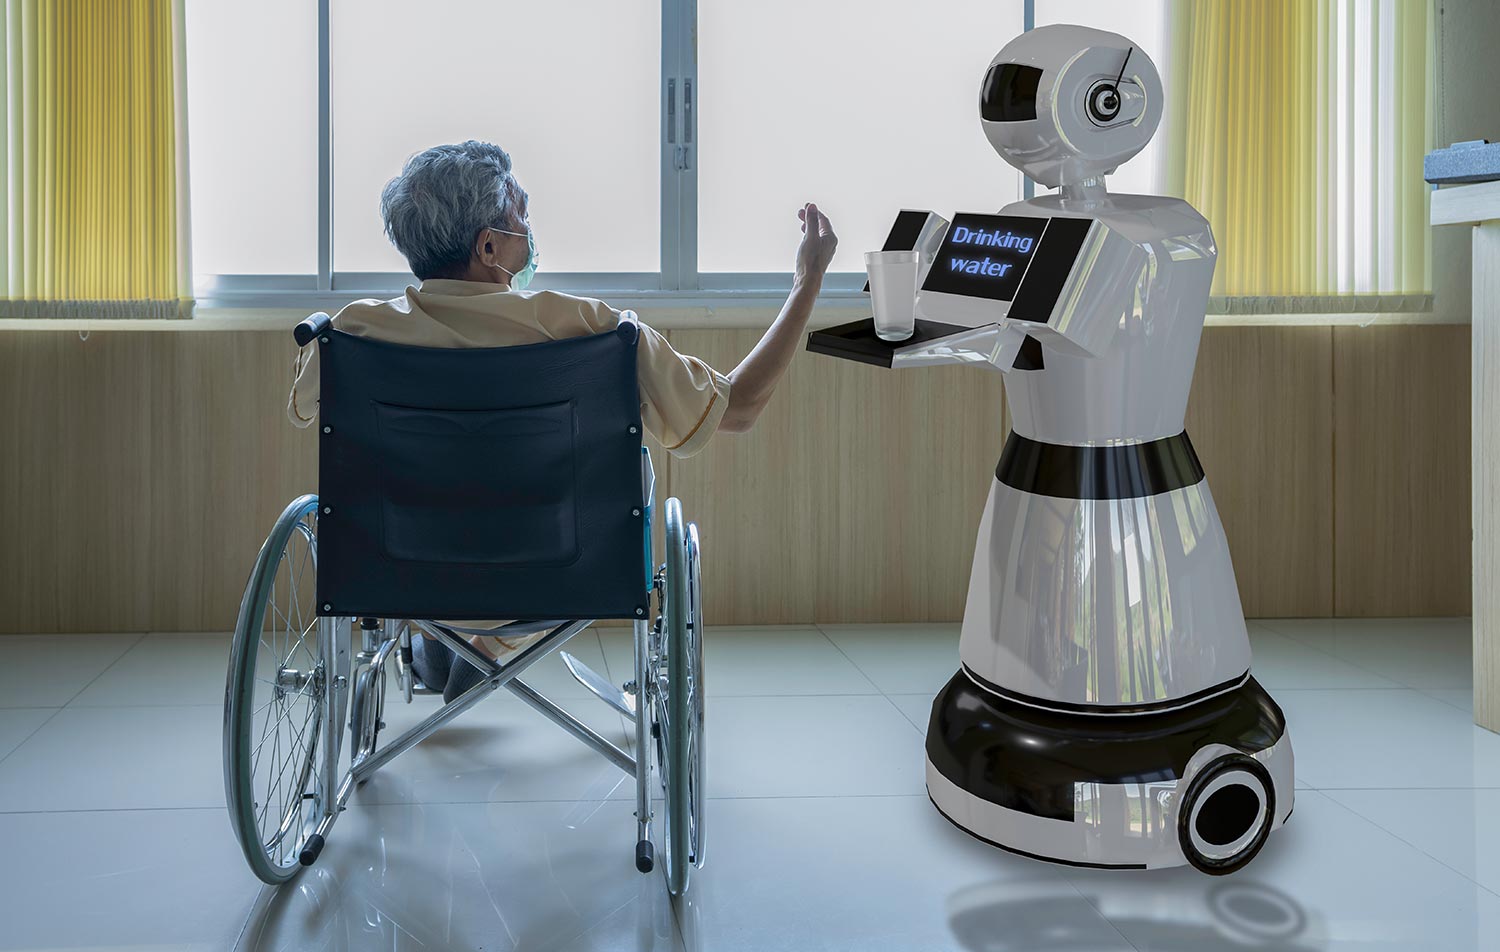 Elderly care robot in the intelligent hospital